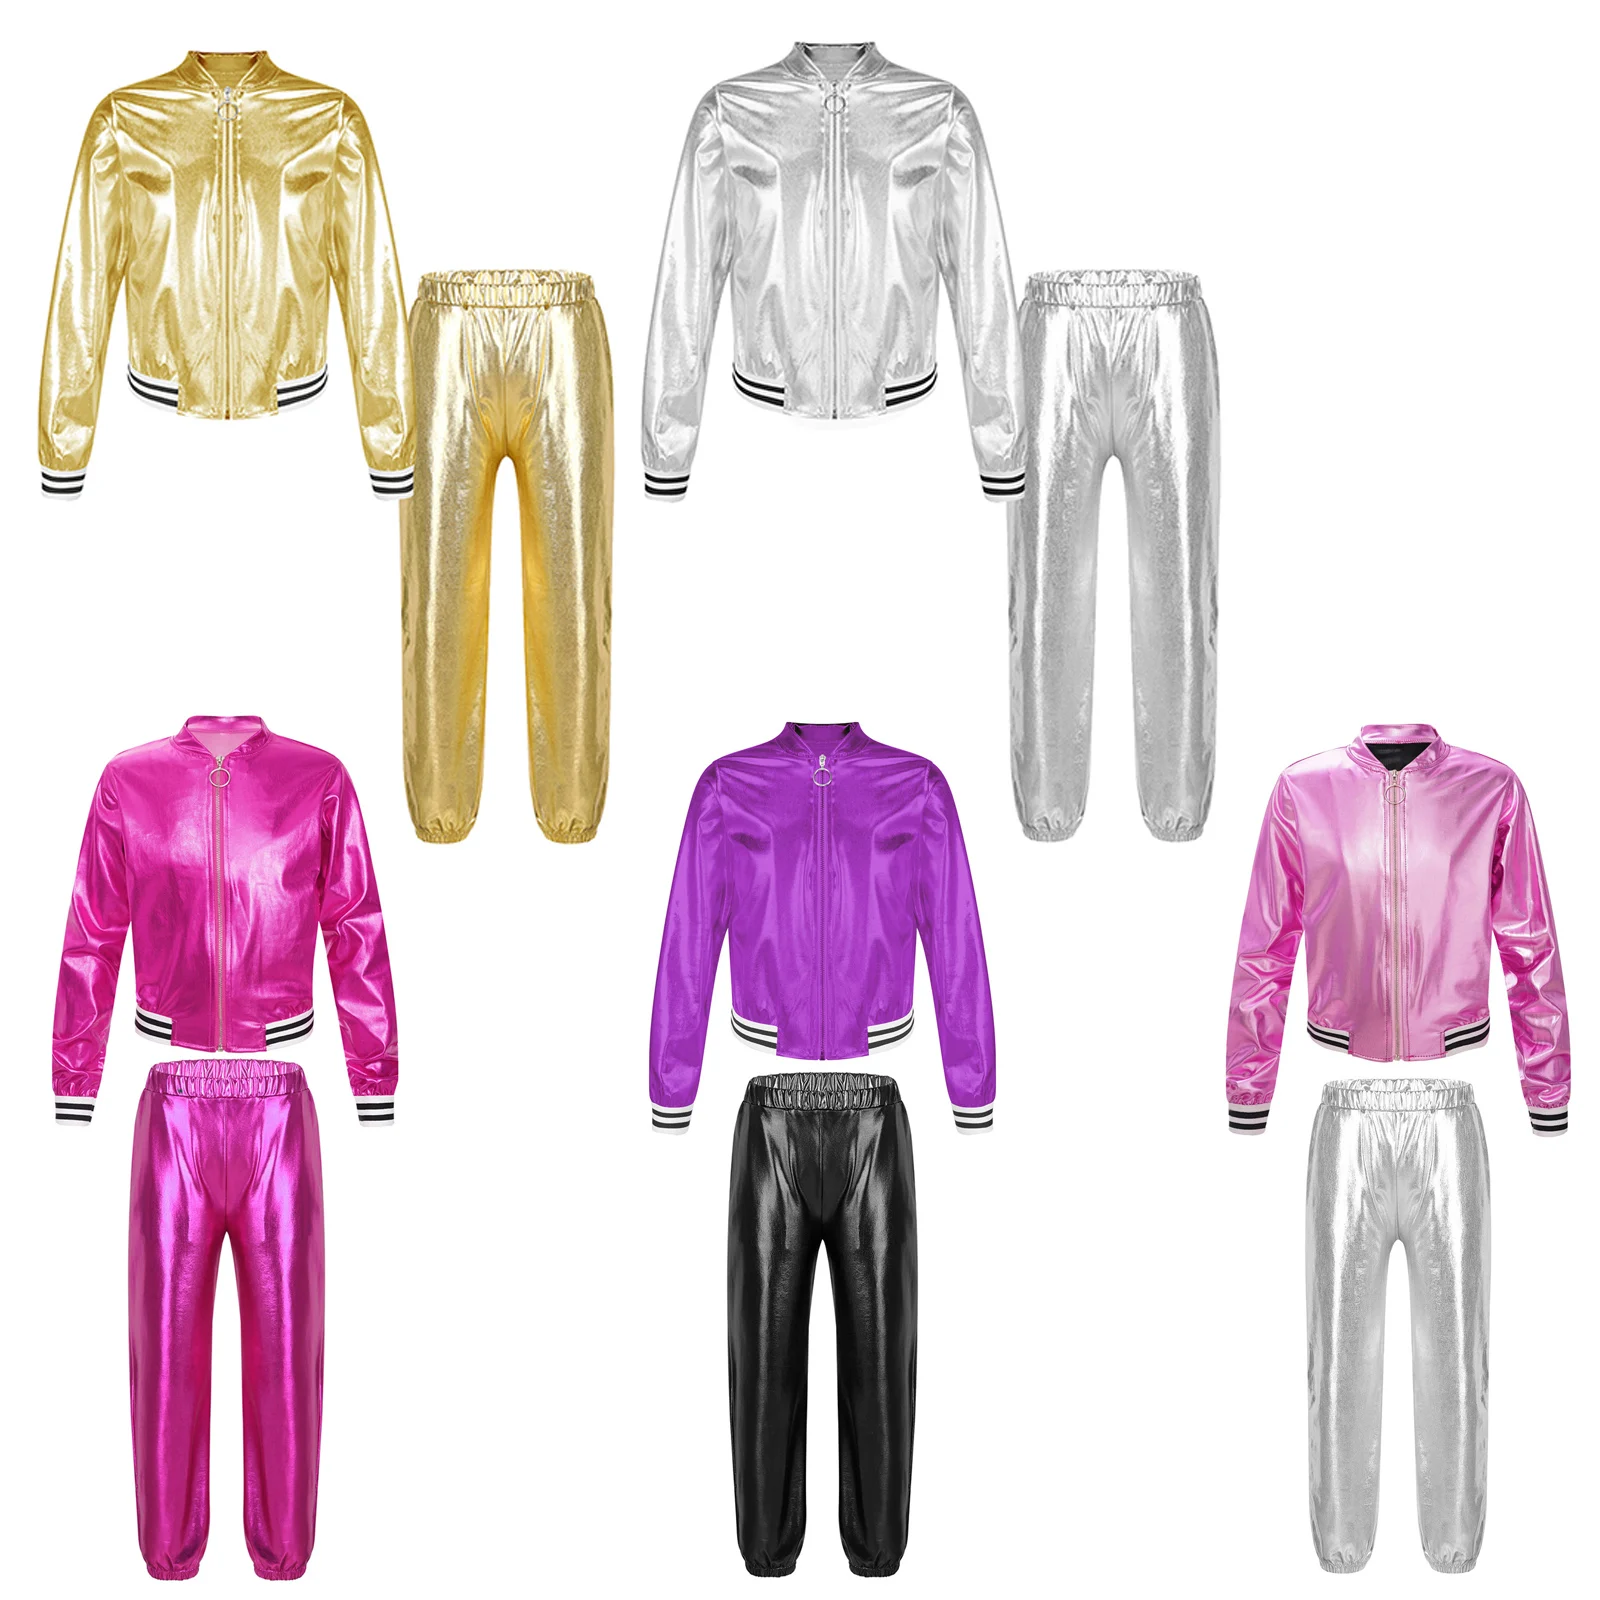 Kids Girls Jazz Hip-hop Dance Costume Sports Street Dancing Performance Outfits Shiny Metallic Jacket Bomber Coat with Pants